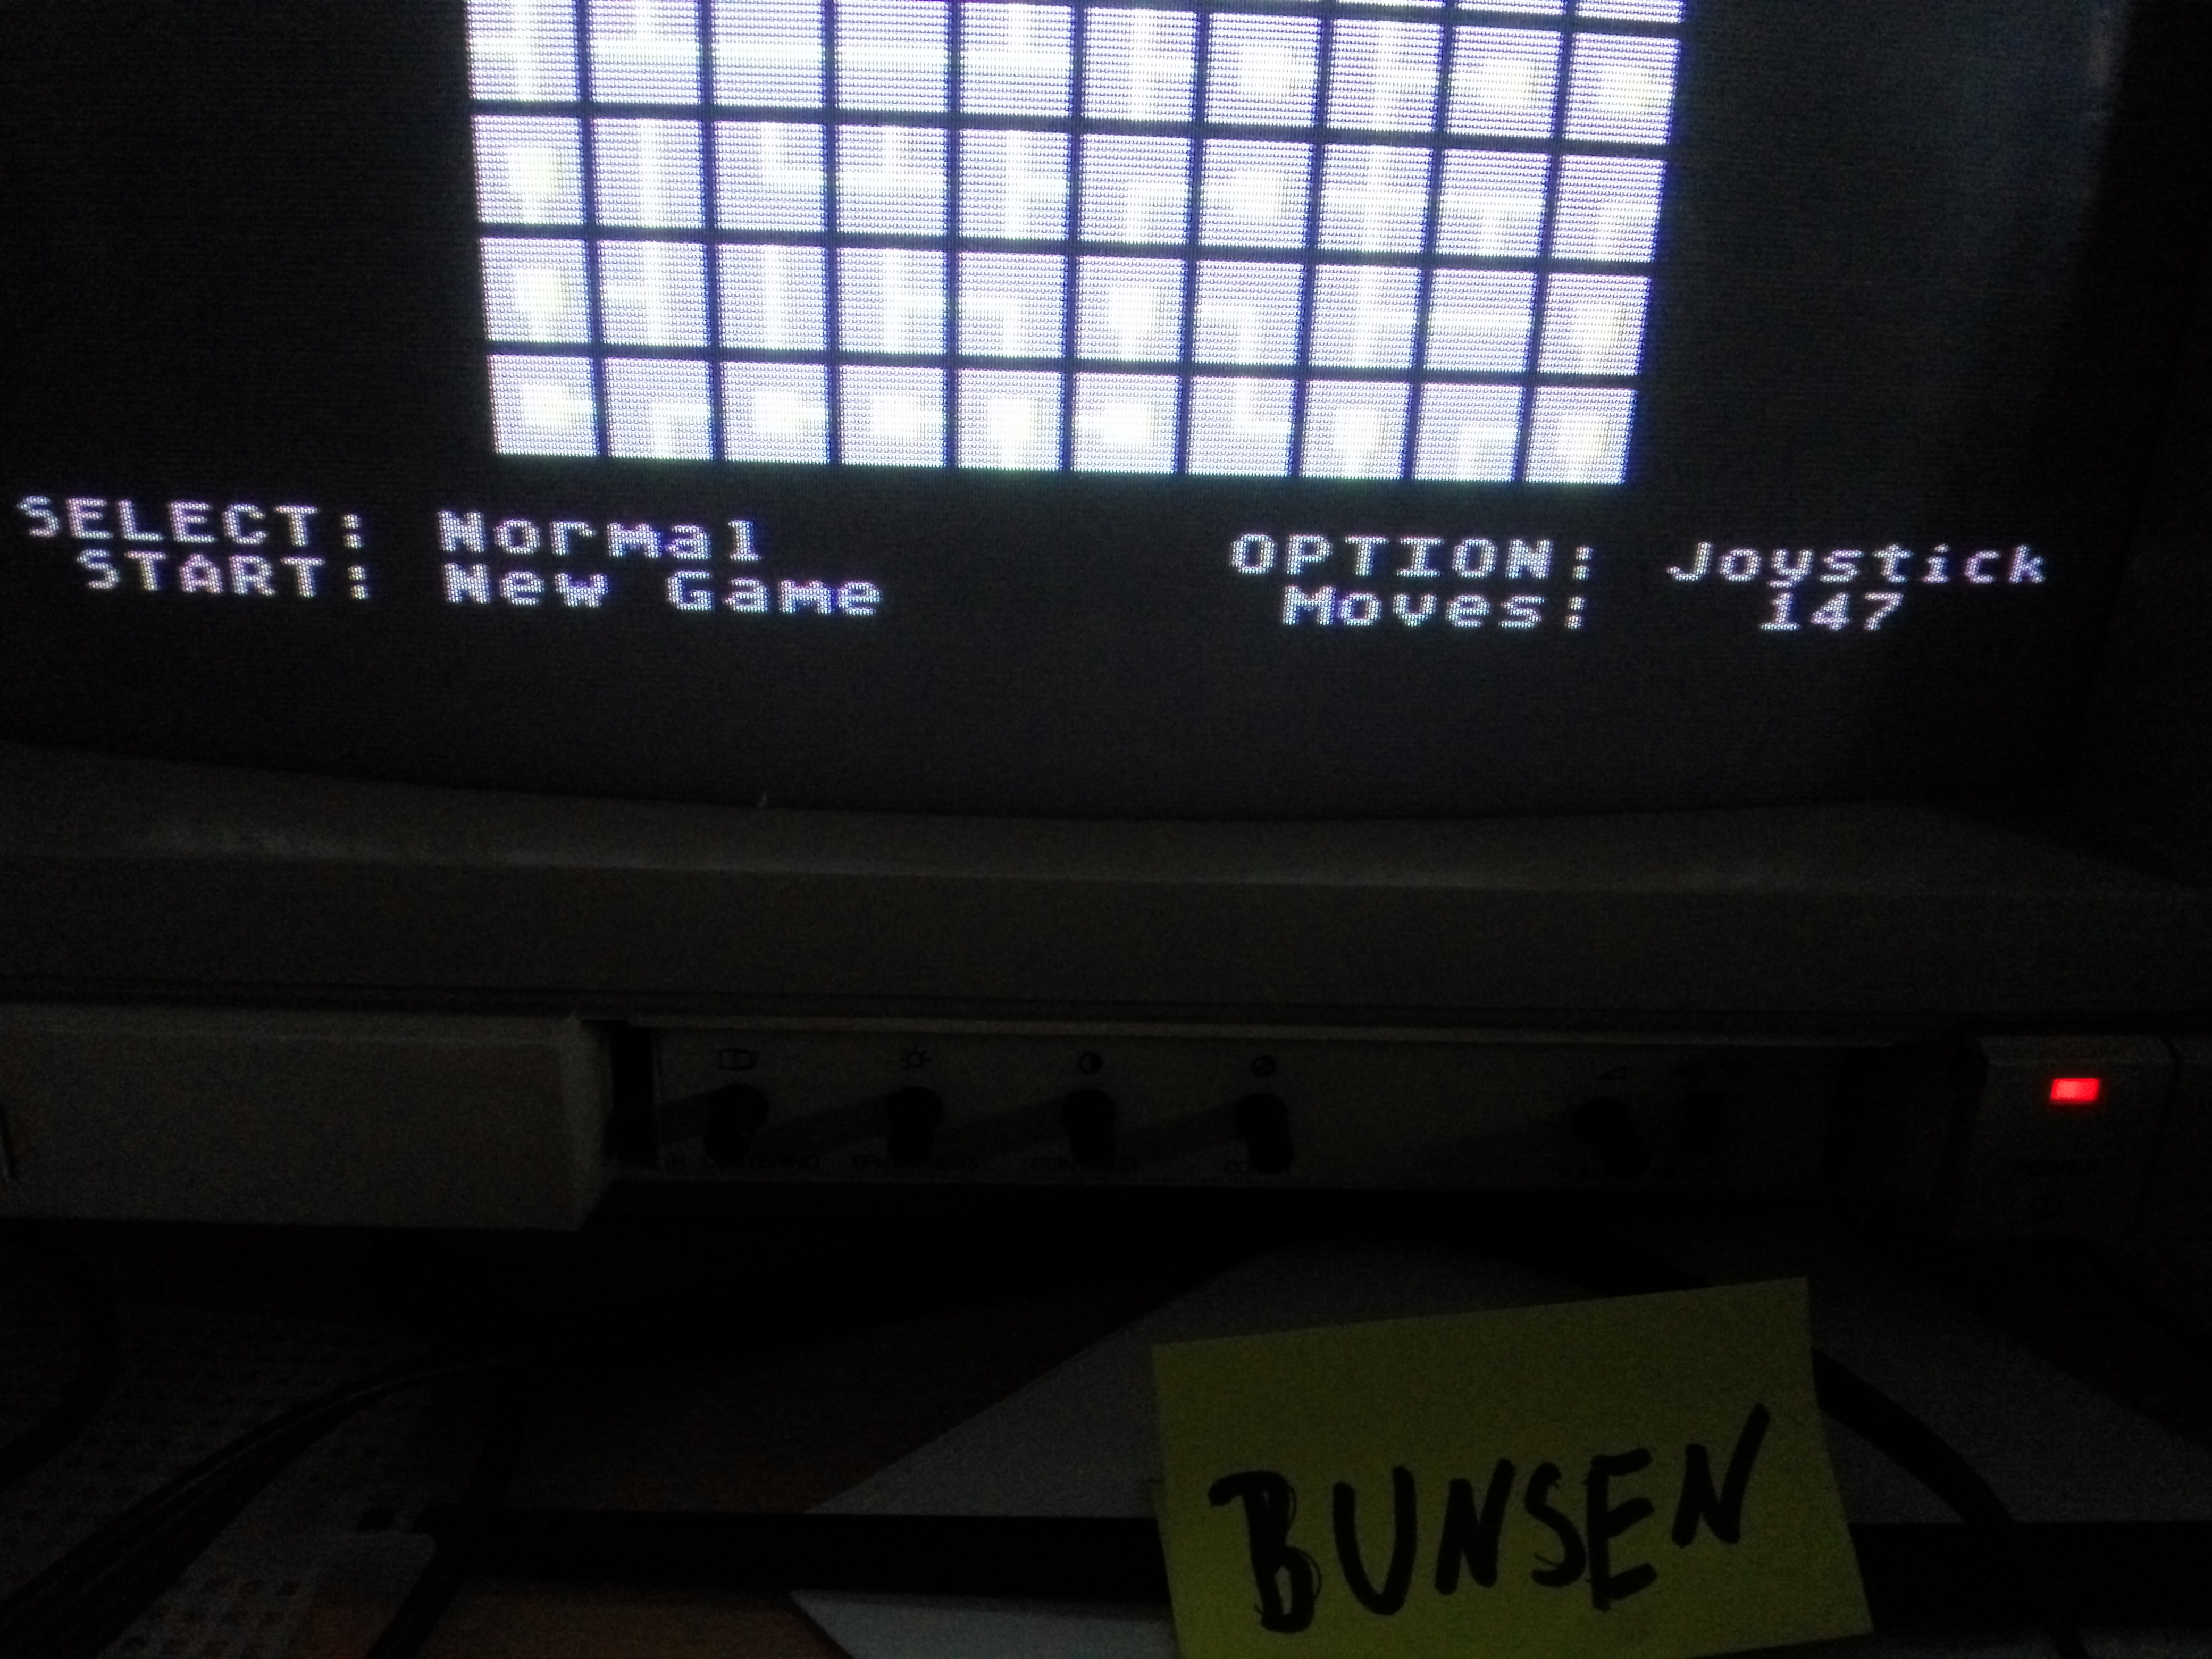 Bunsen: AtariNet 1.0 [Normal] (Atari 400/800/XL/XE) 147 points on 2016-10-06 13:39:11